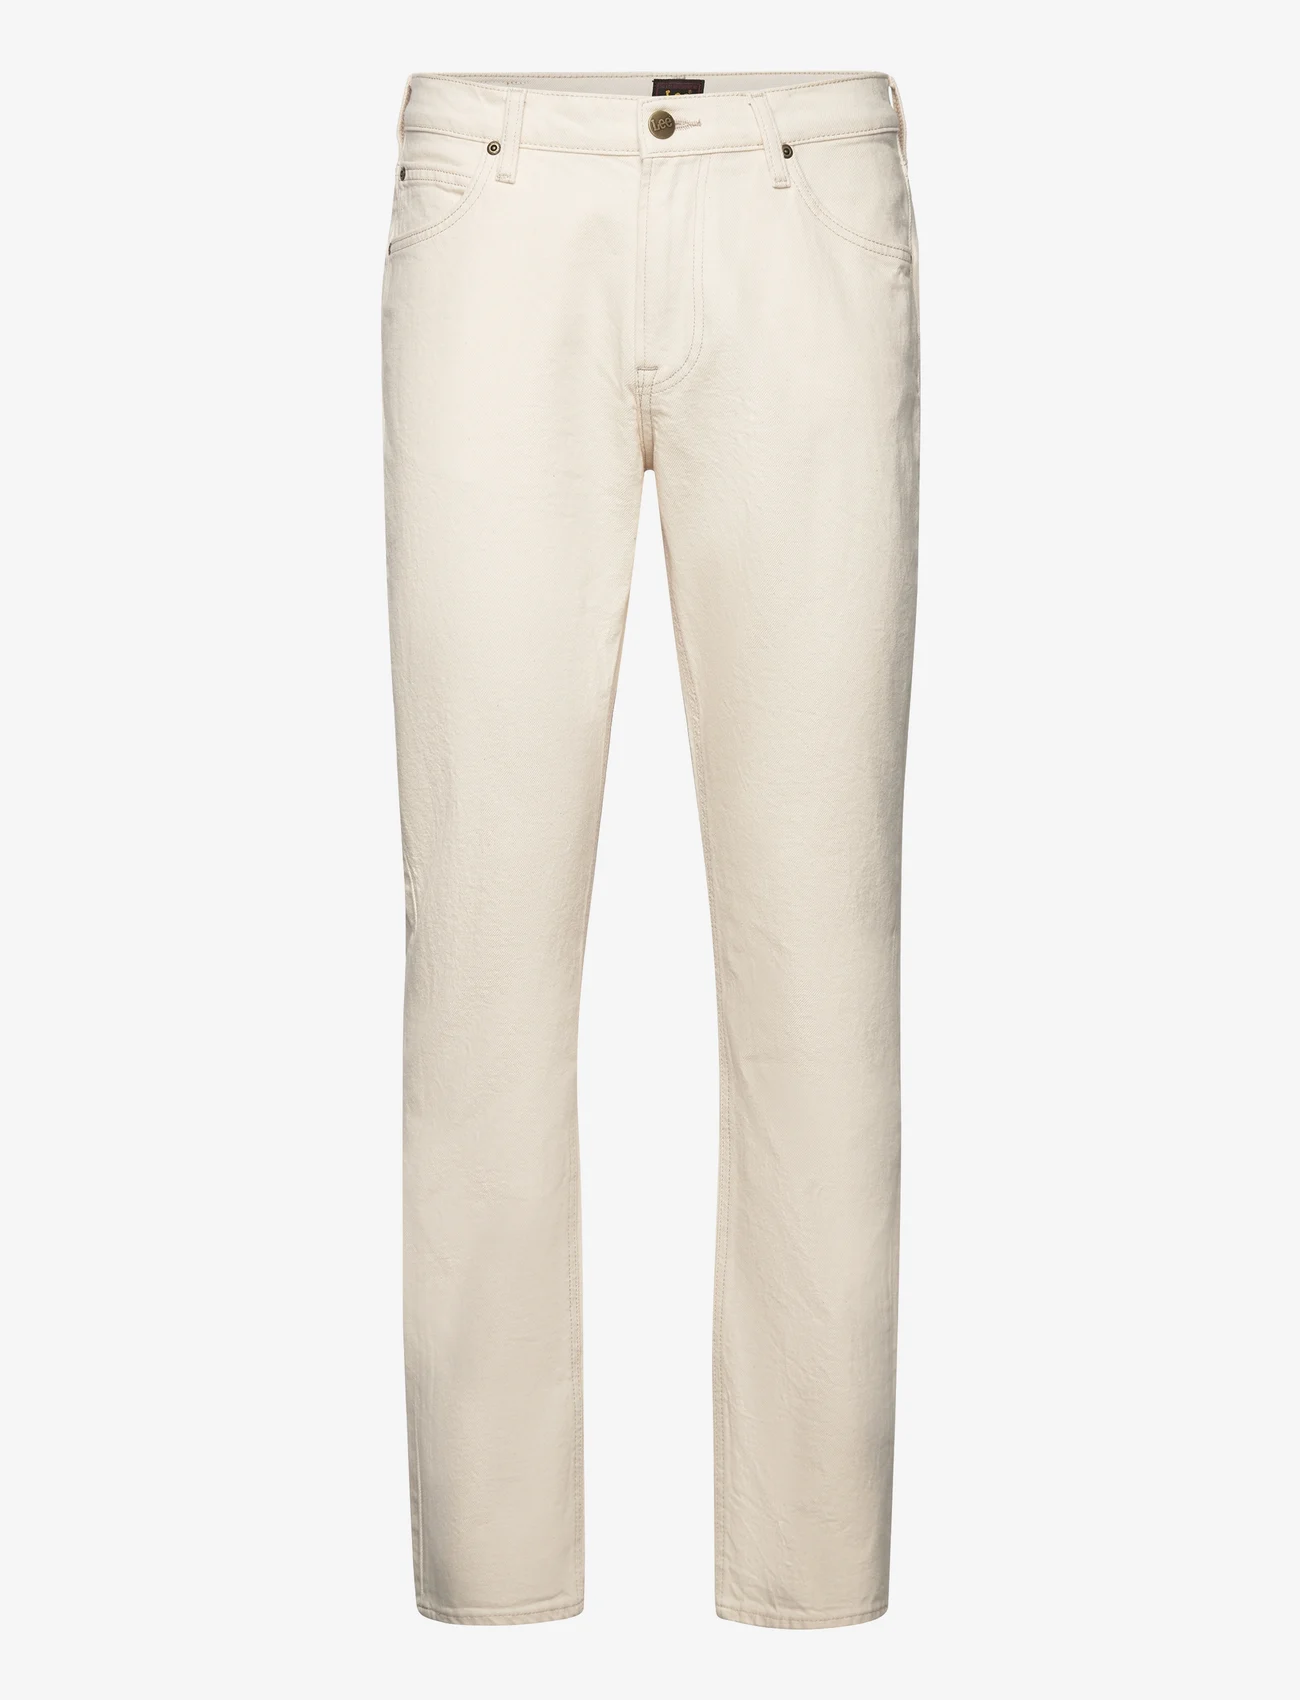 Lee Jeans - WEST - regular jeans - off white - 0